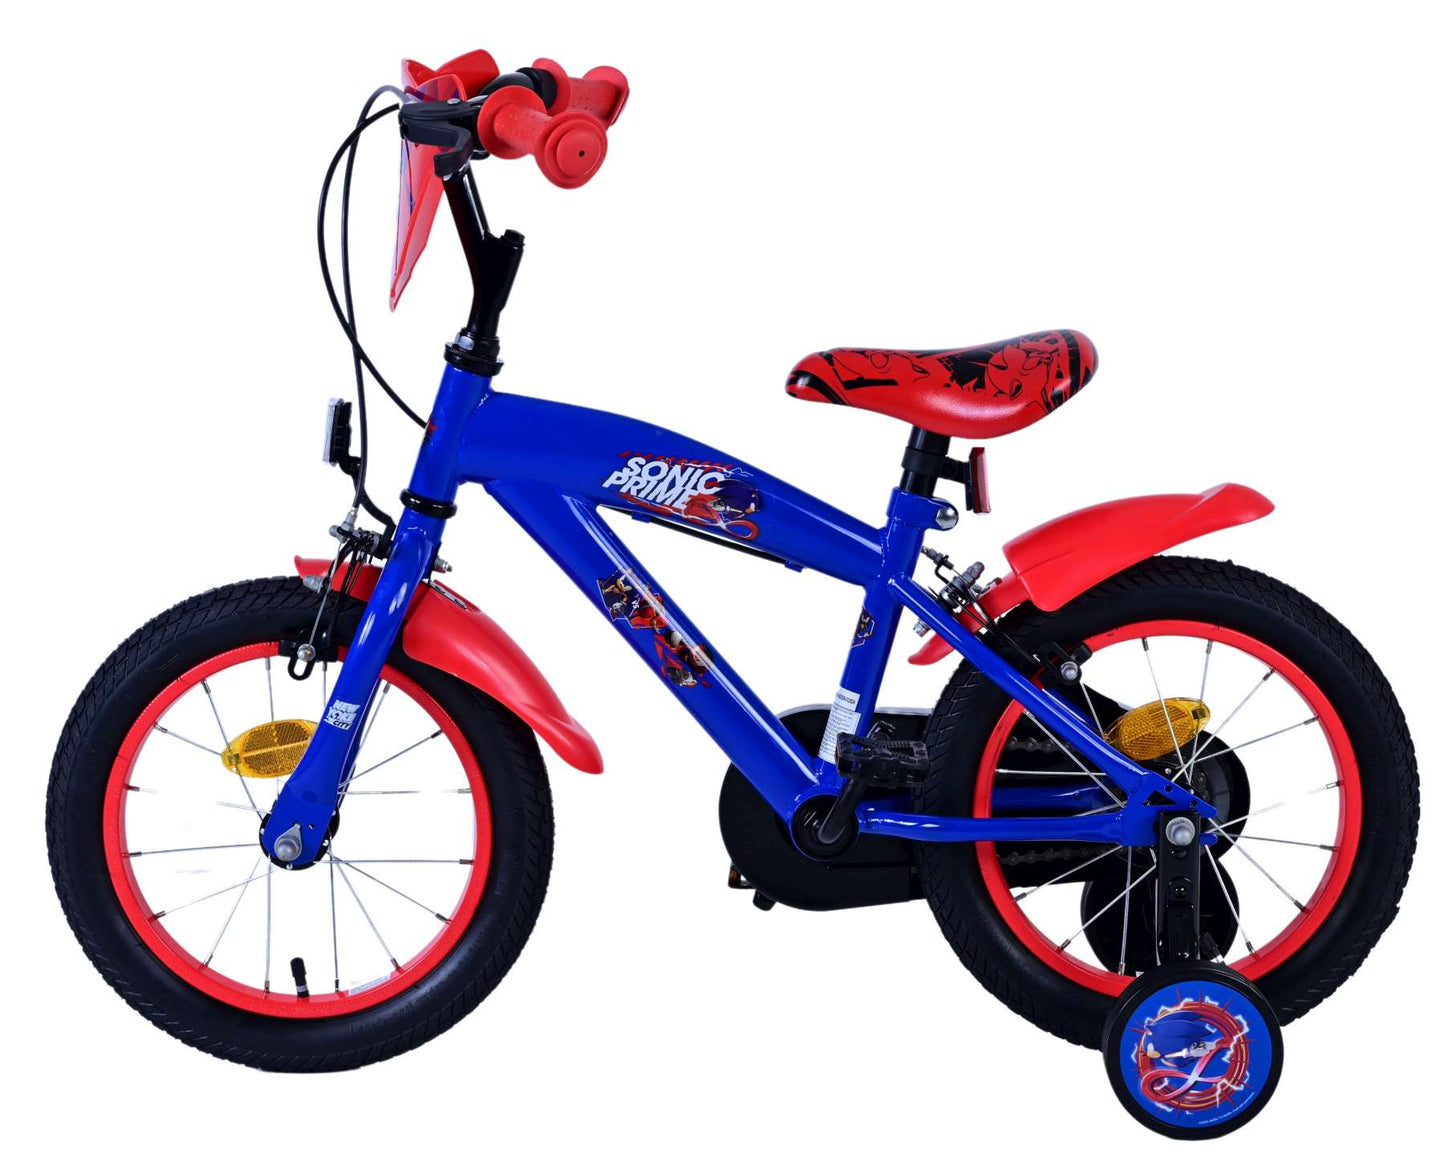 Sonic Prime Prime Children's Bike Boys Boys da 14 pollici Blue Red Due Hand Freen